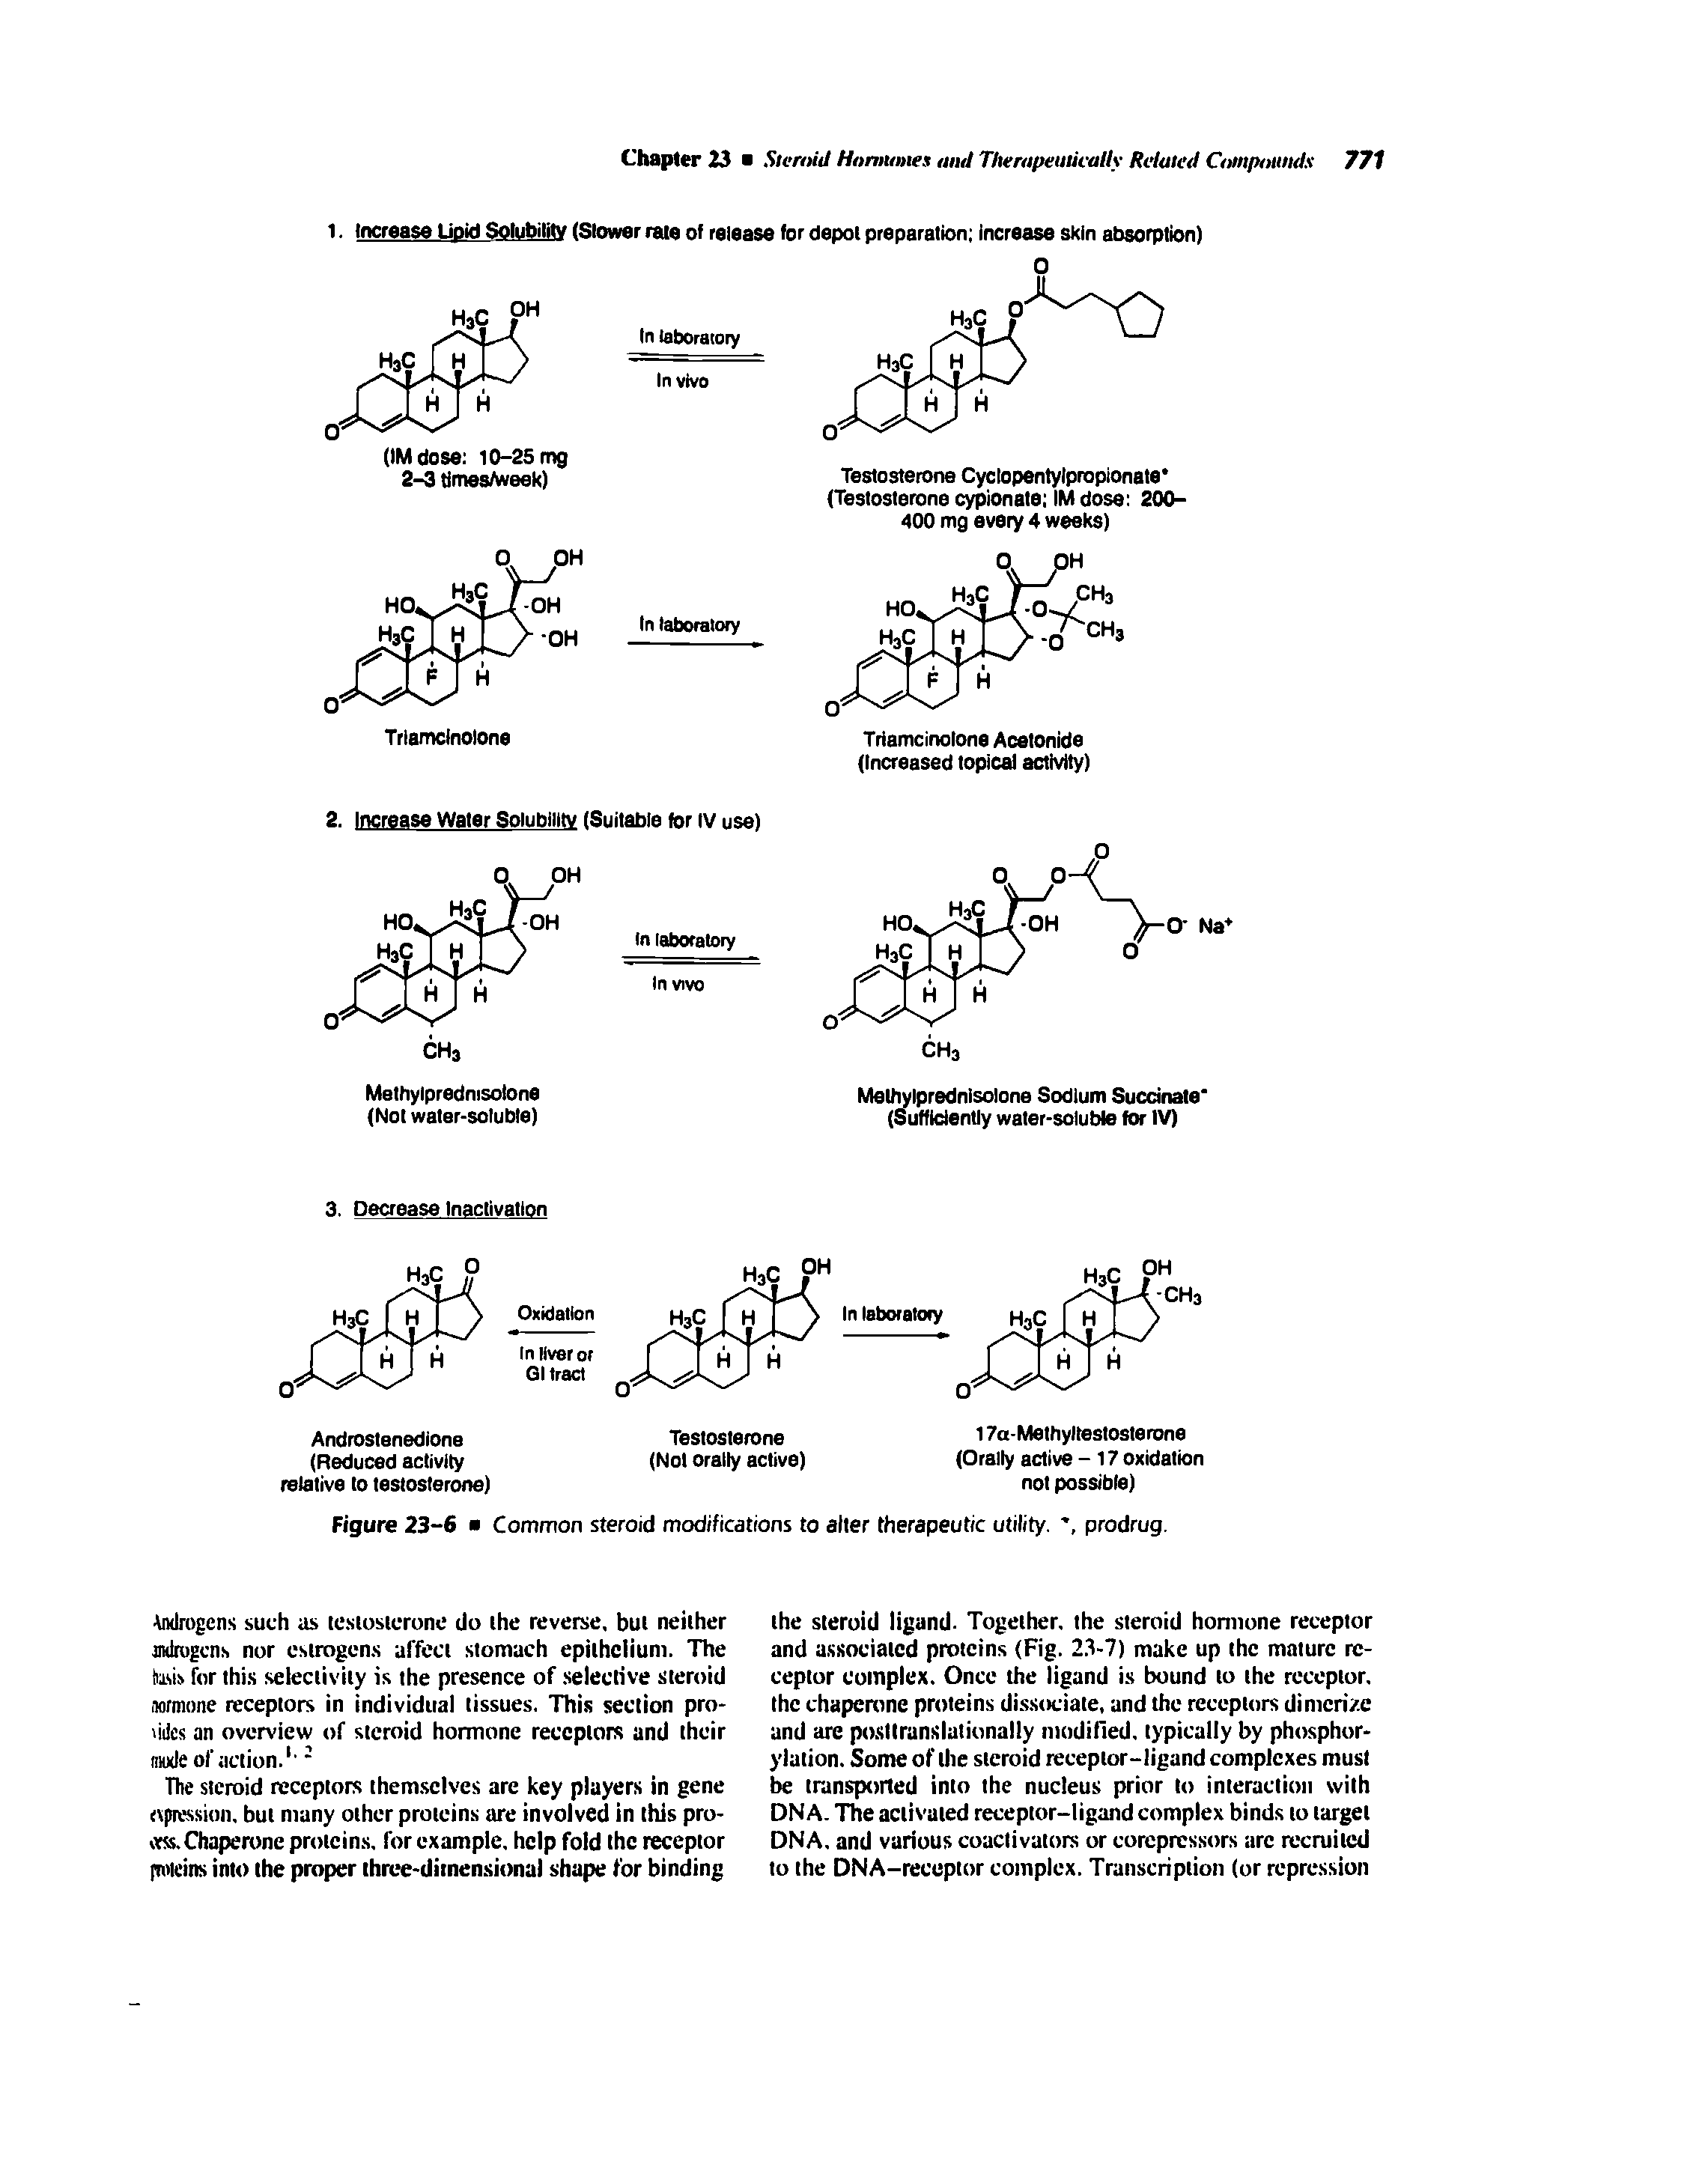 Figure 23-6 Common steroid modifications to alter therapeutic utility. prodrug.